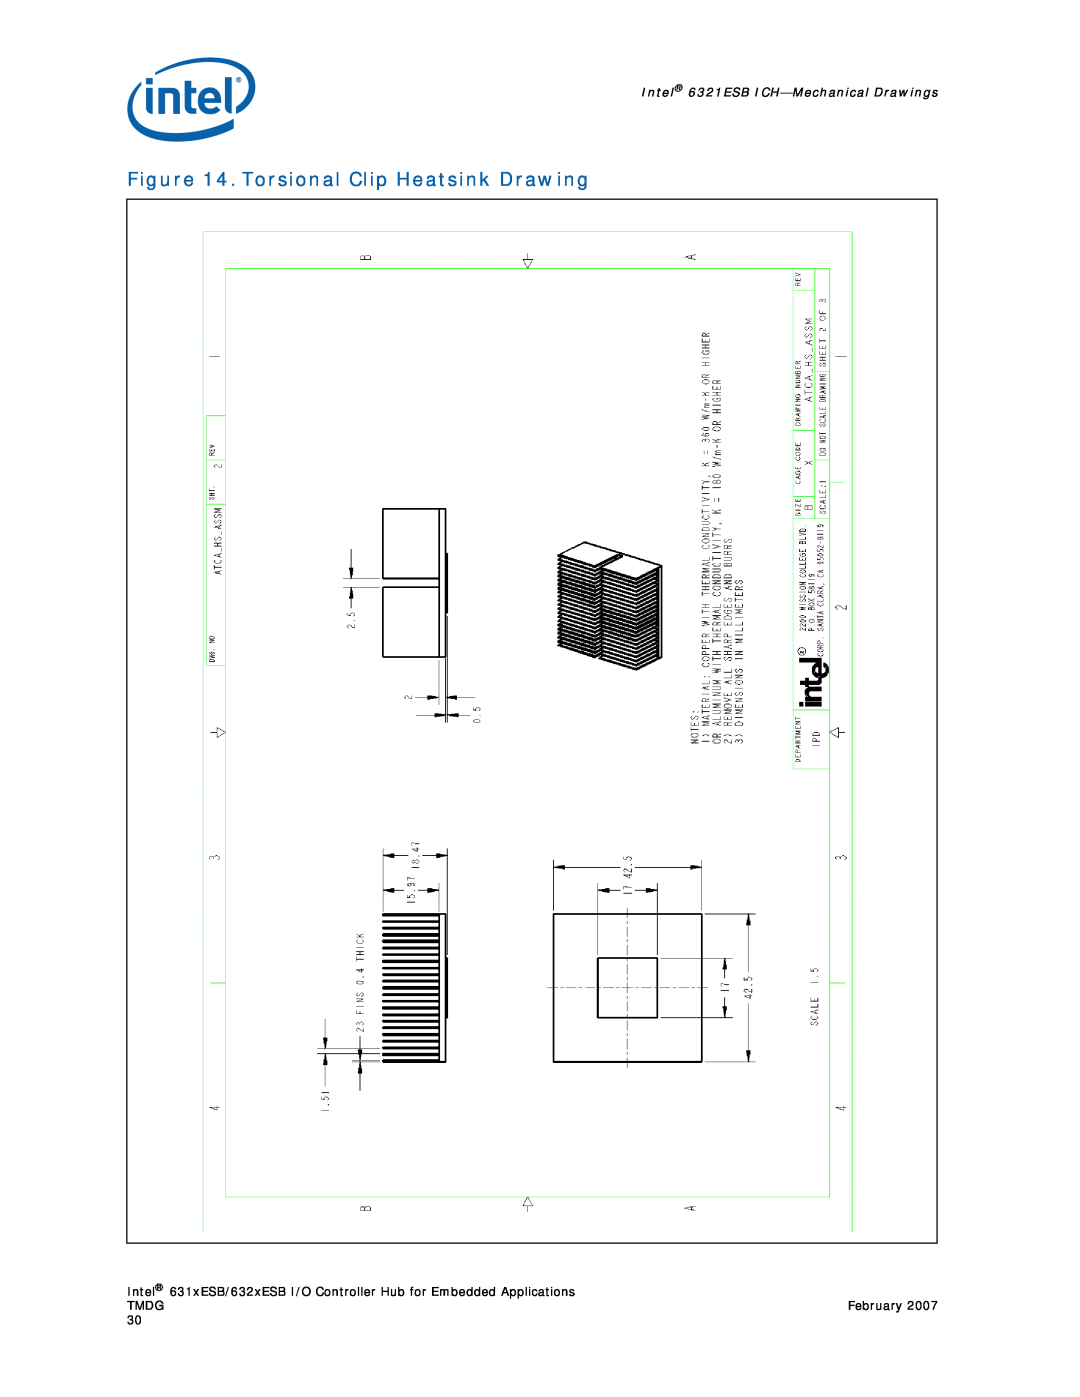 Intel 631xESB, 632xESB manual Torsional Clip Heatsink Drawing, Intel 6321ESB ICH-Mechanical Drawings 